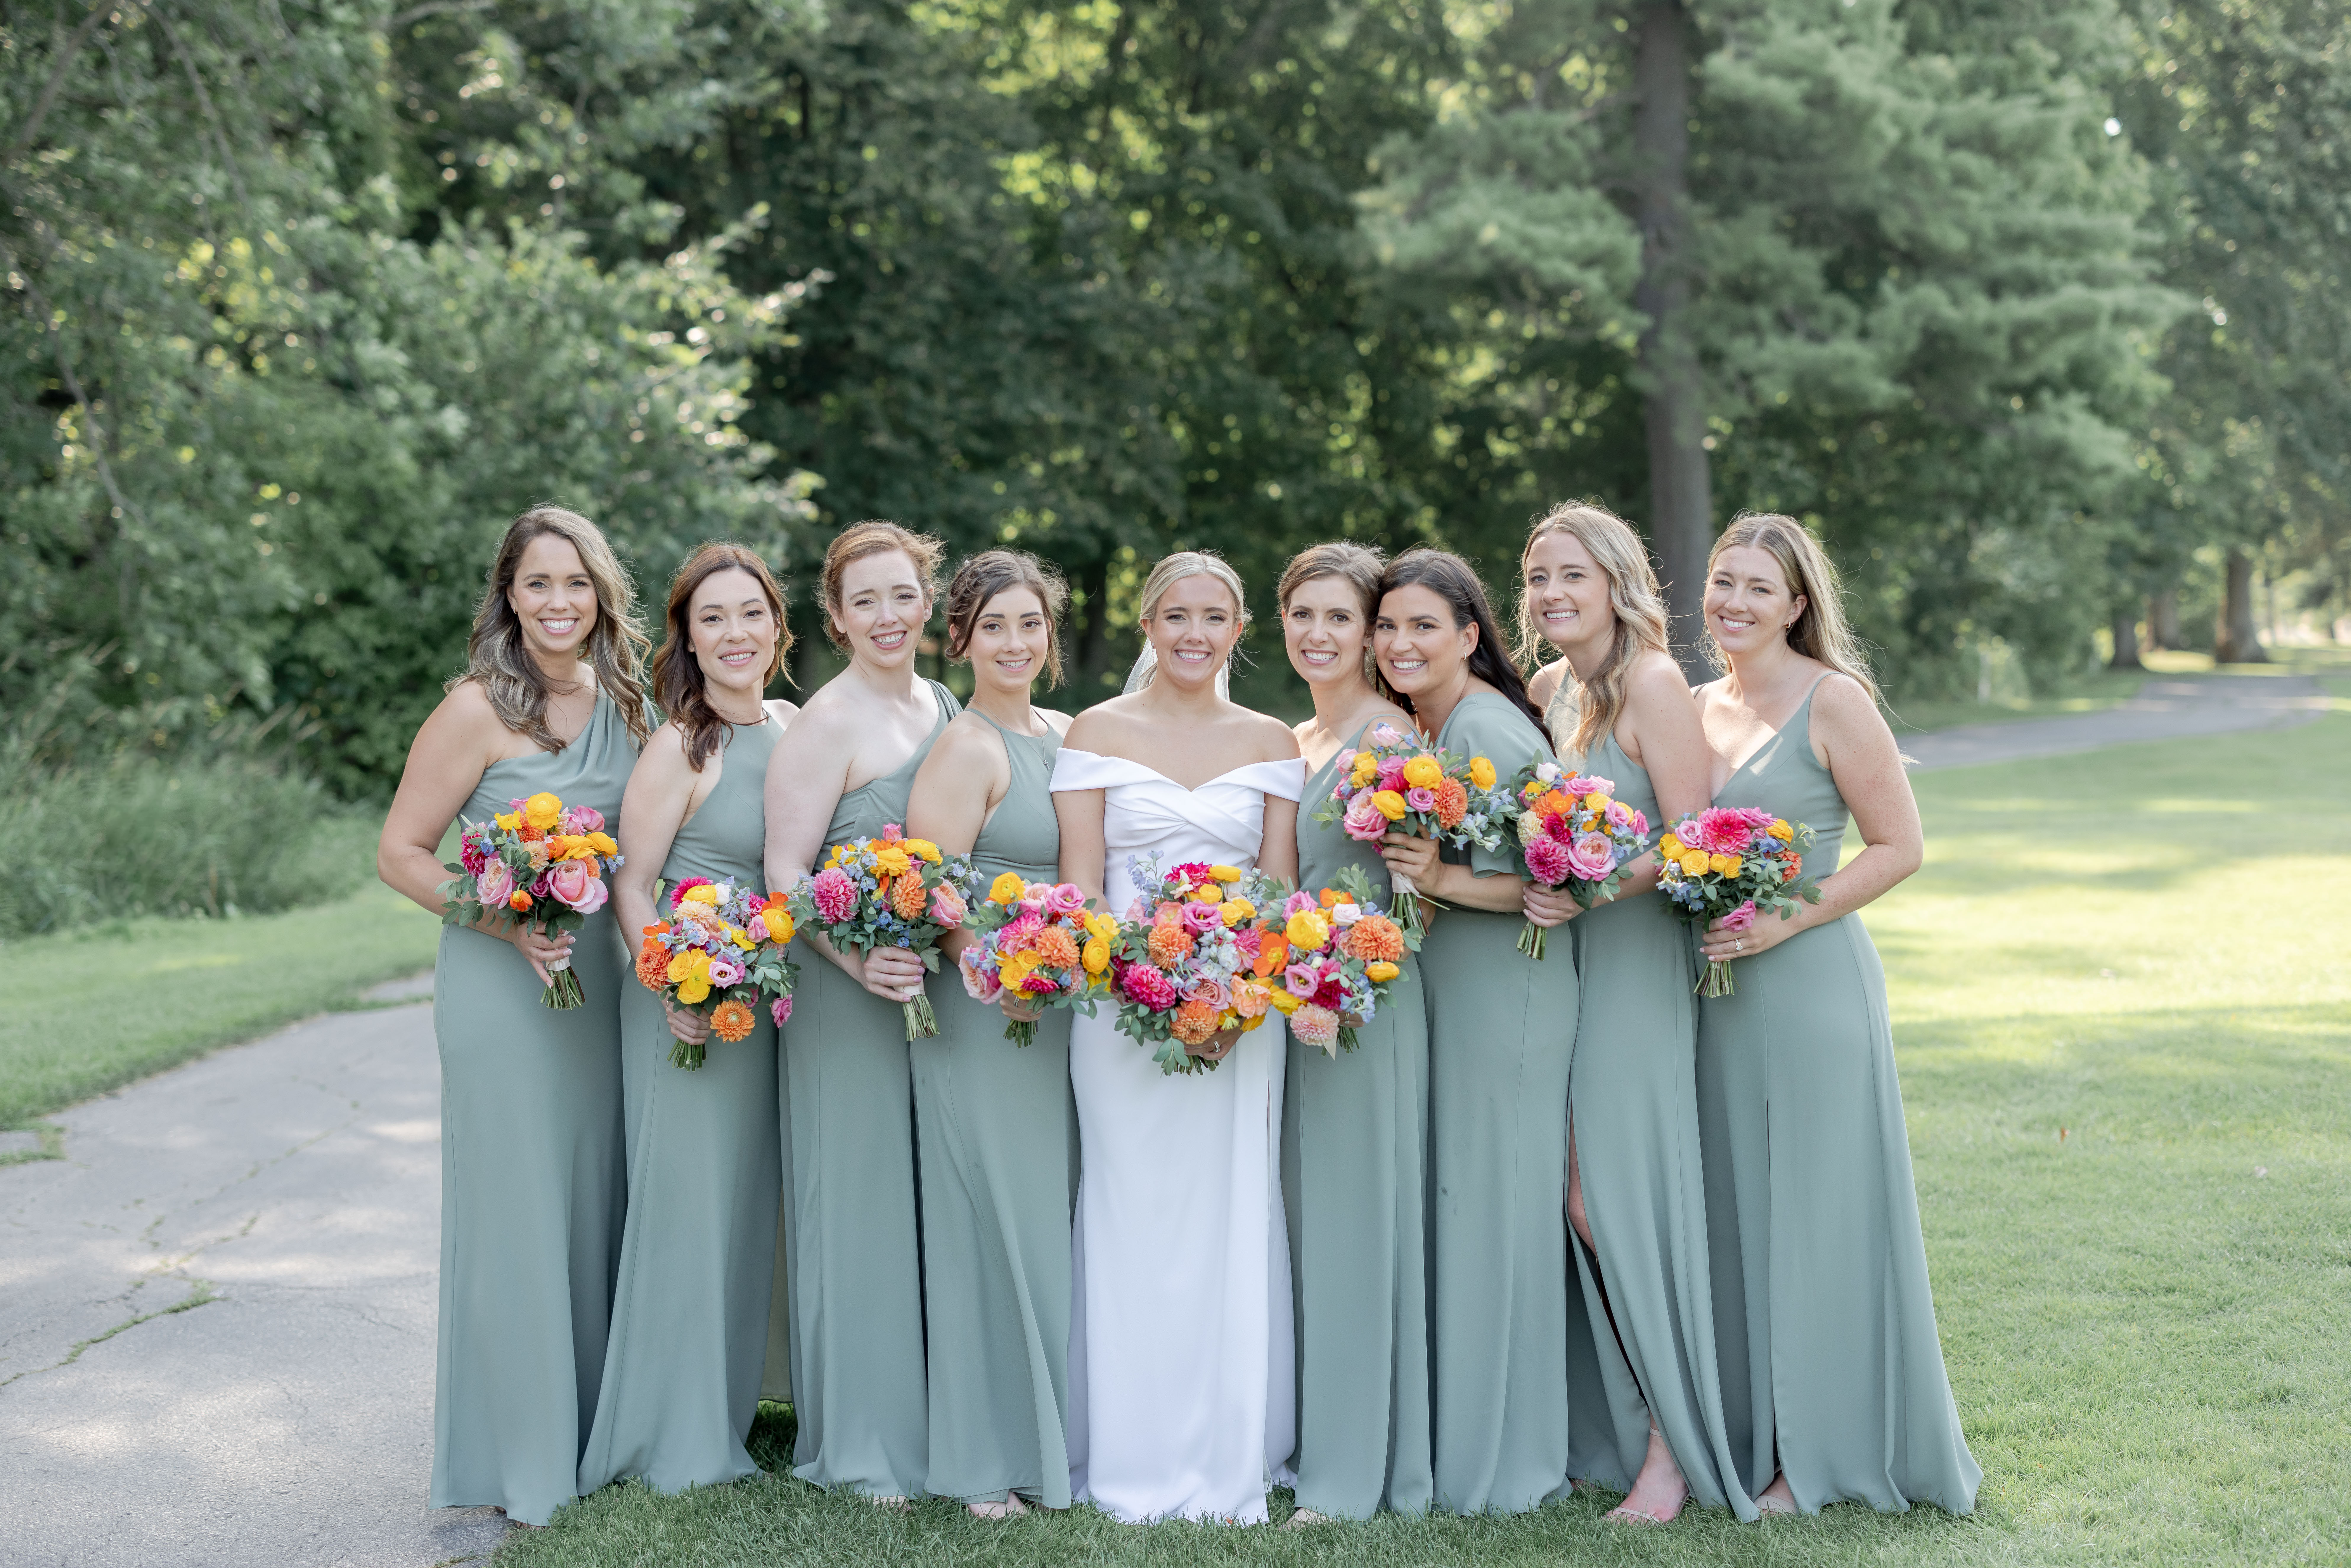 green-bay-wisconsin-wedding-photographer